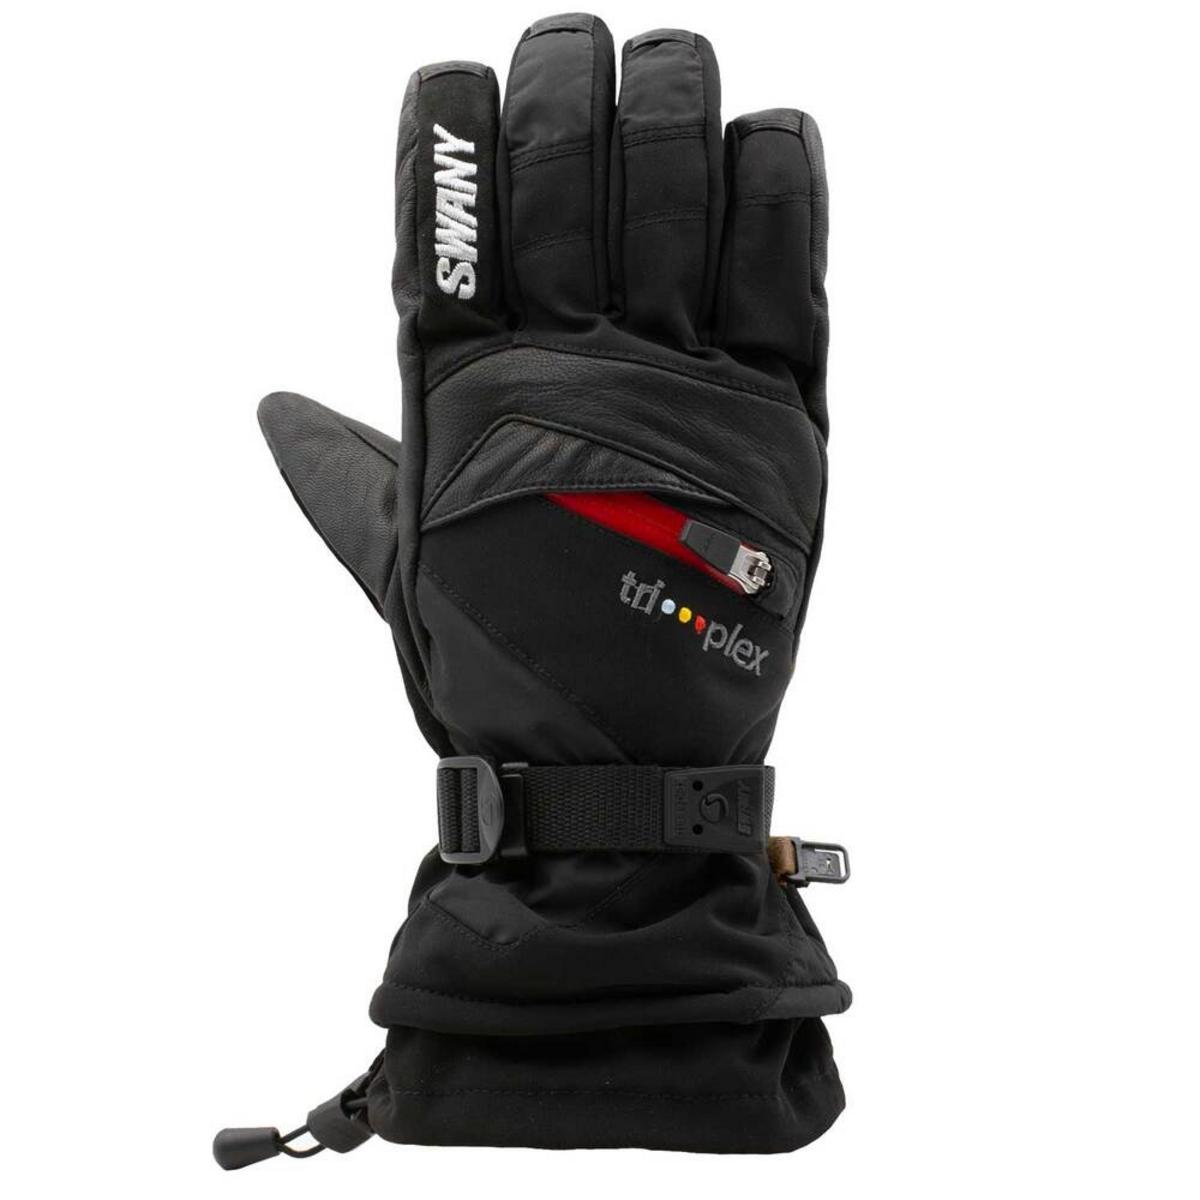 Swany Women's X-Change Gloves 2.1